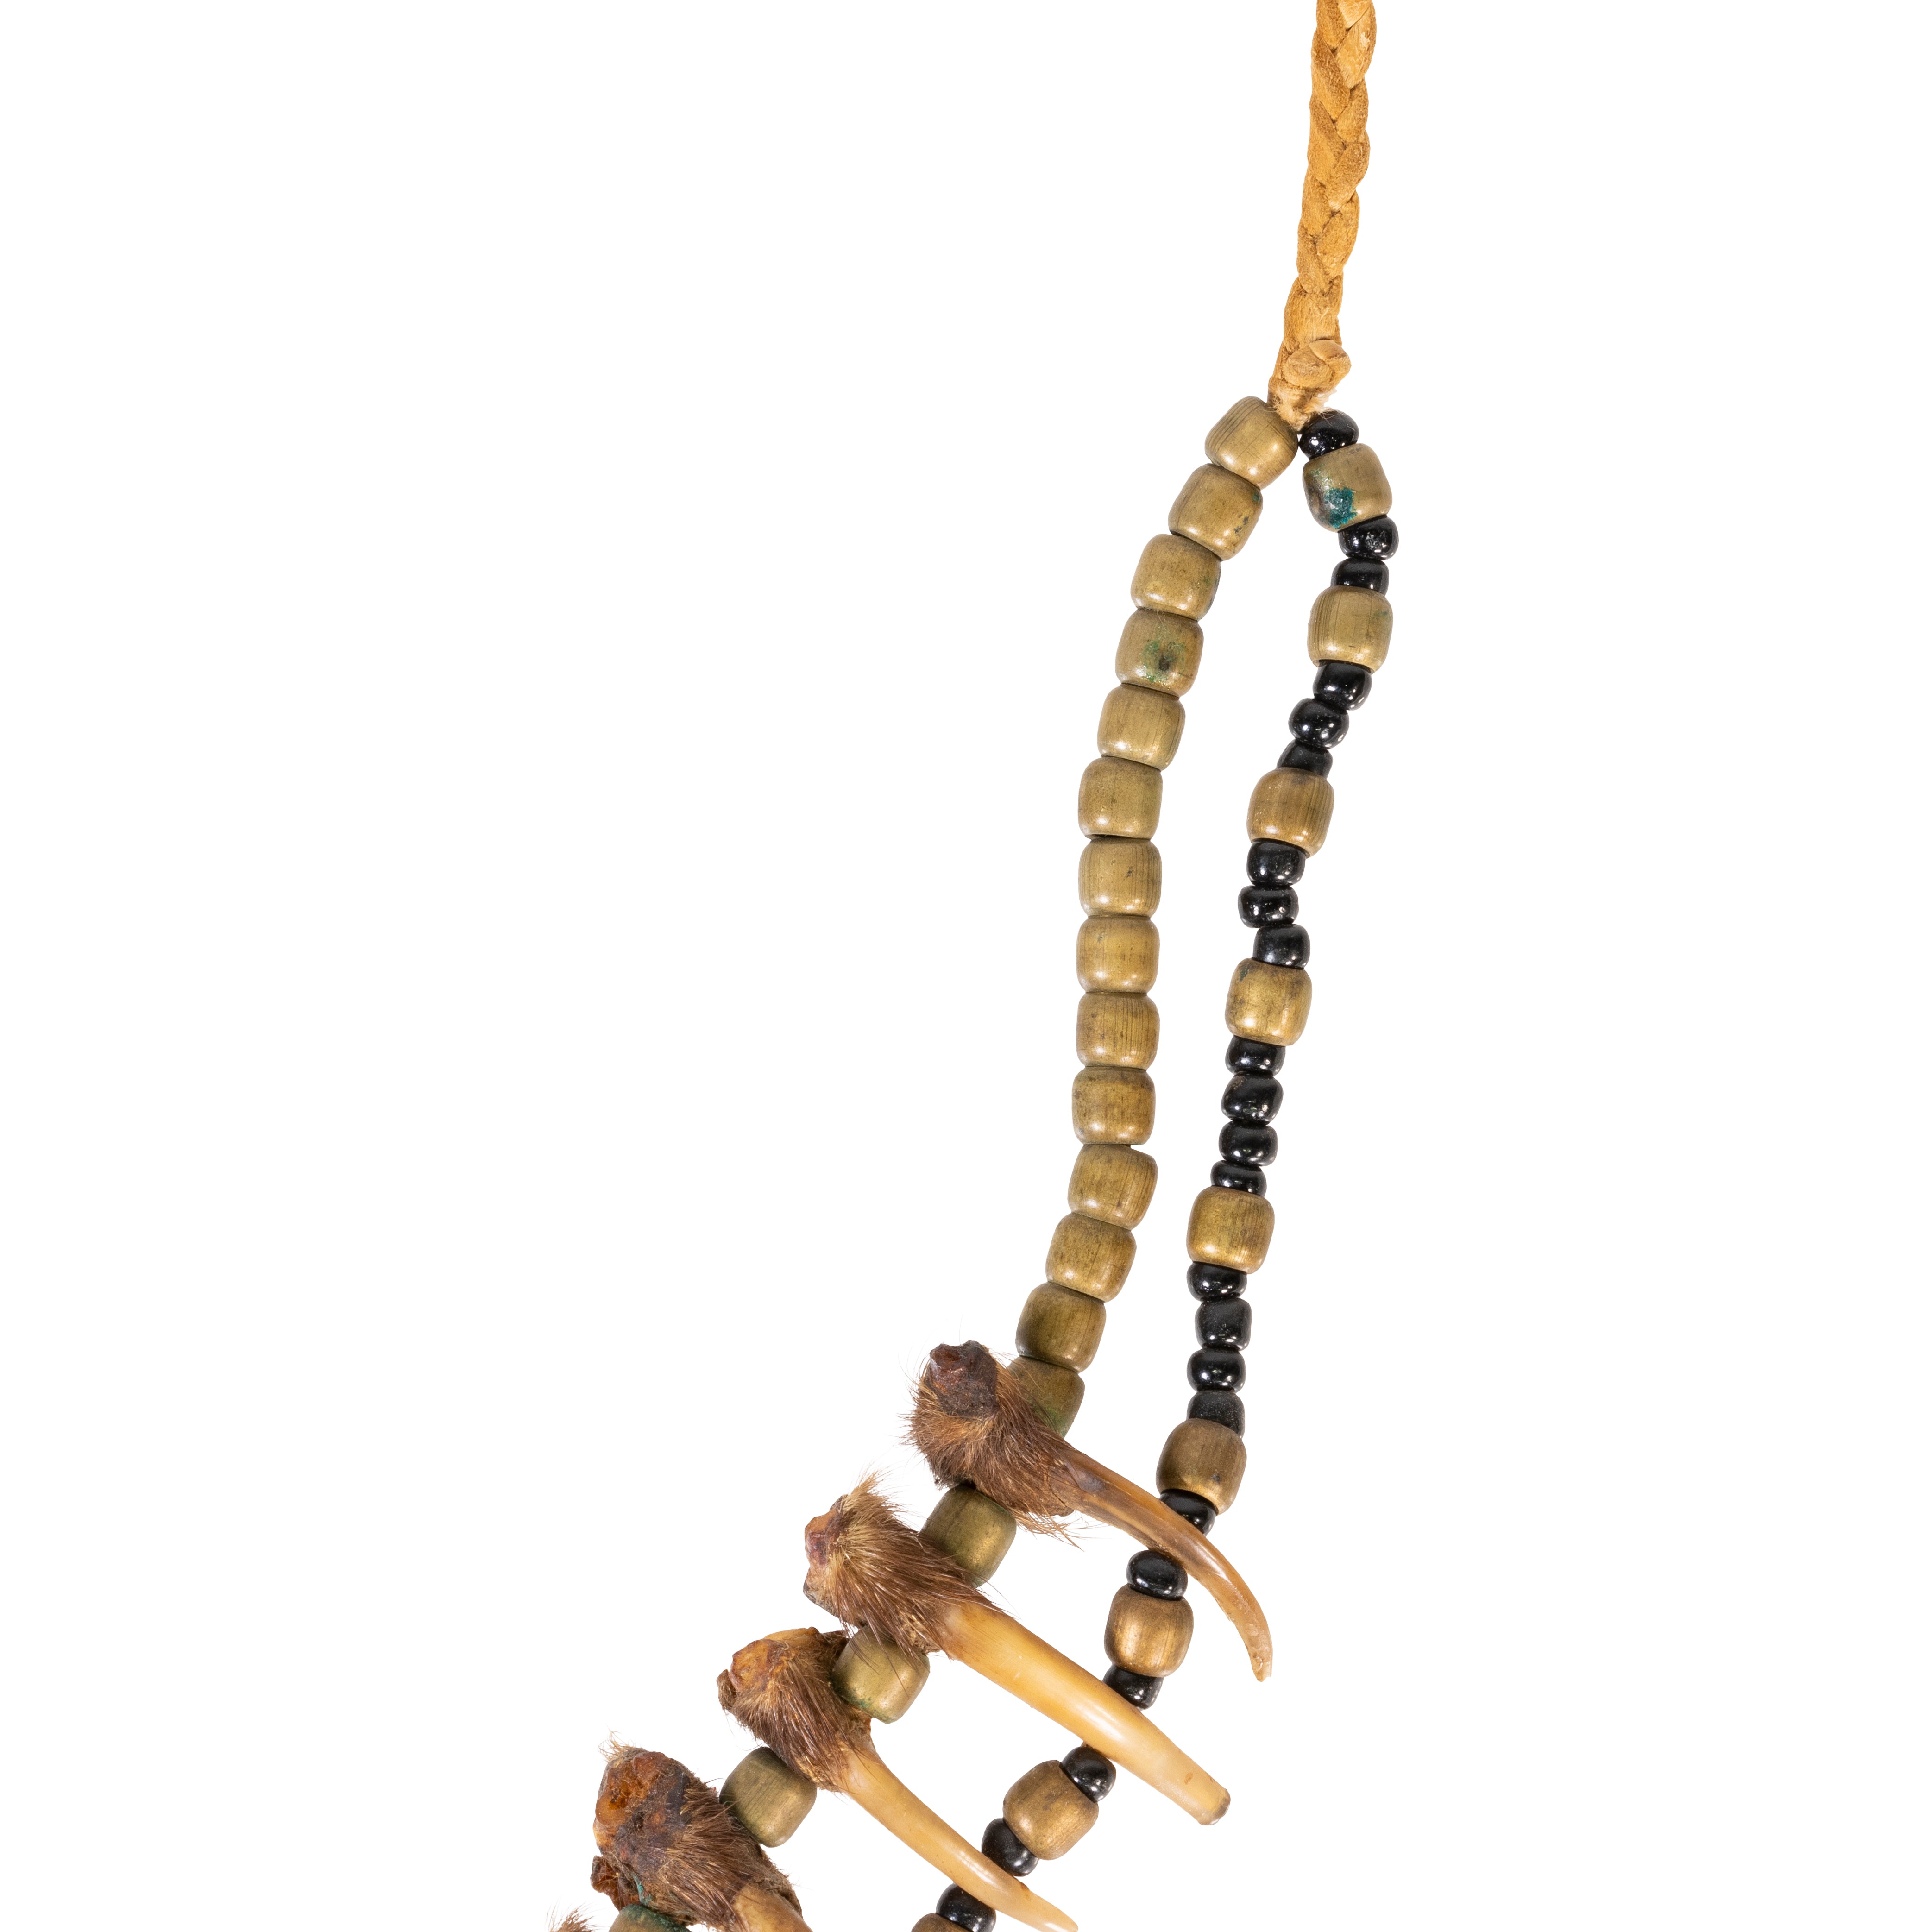 Northern Plains Warrior's Necklace